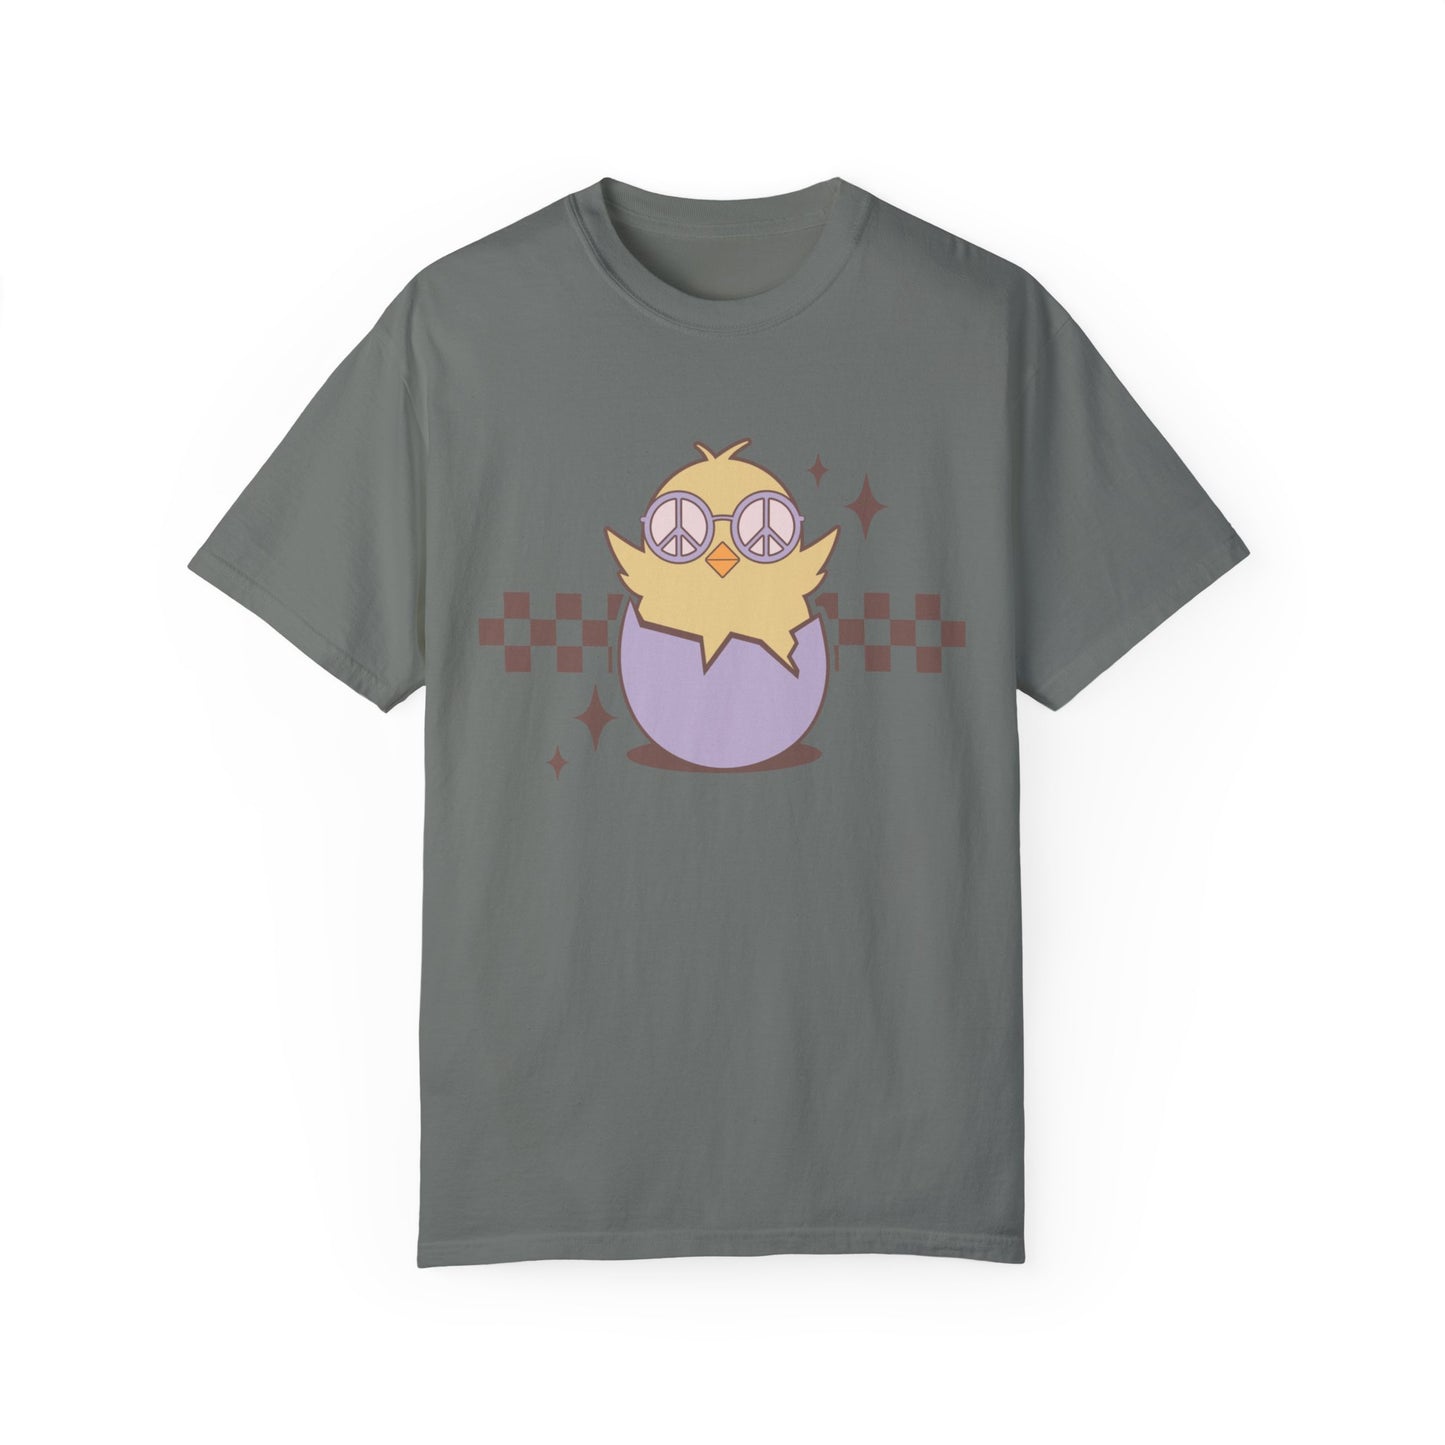 Groovy Chick Shirt